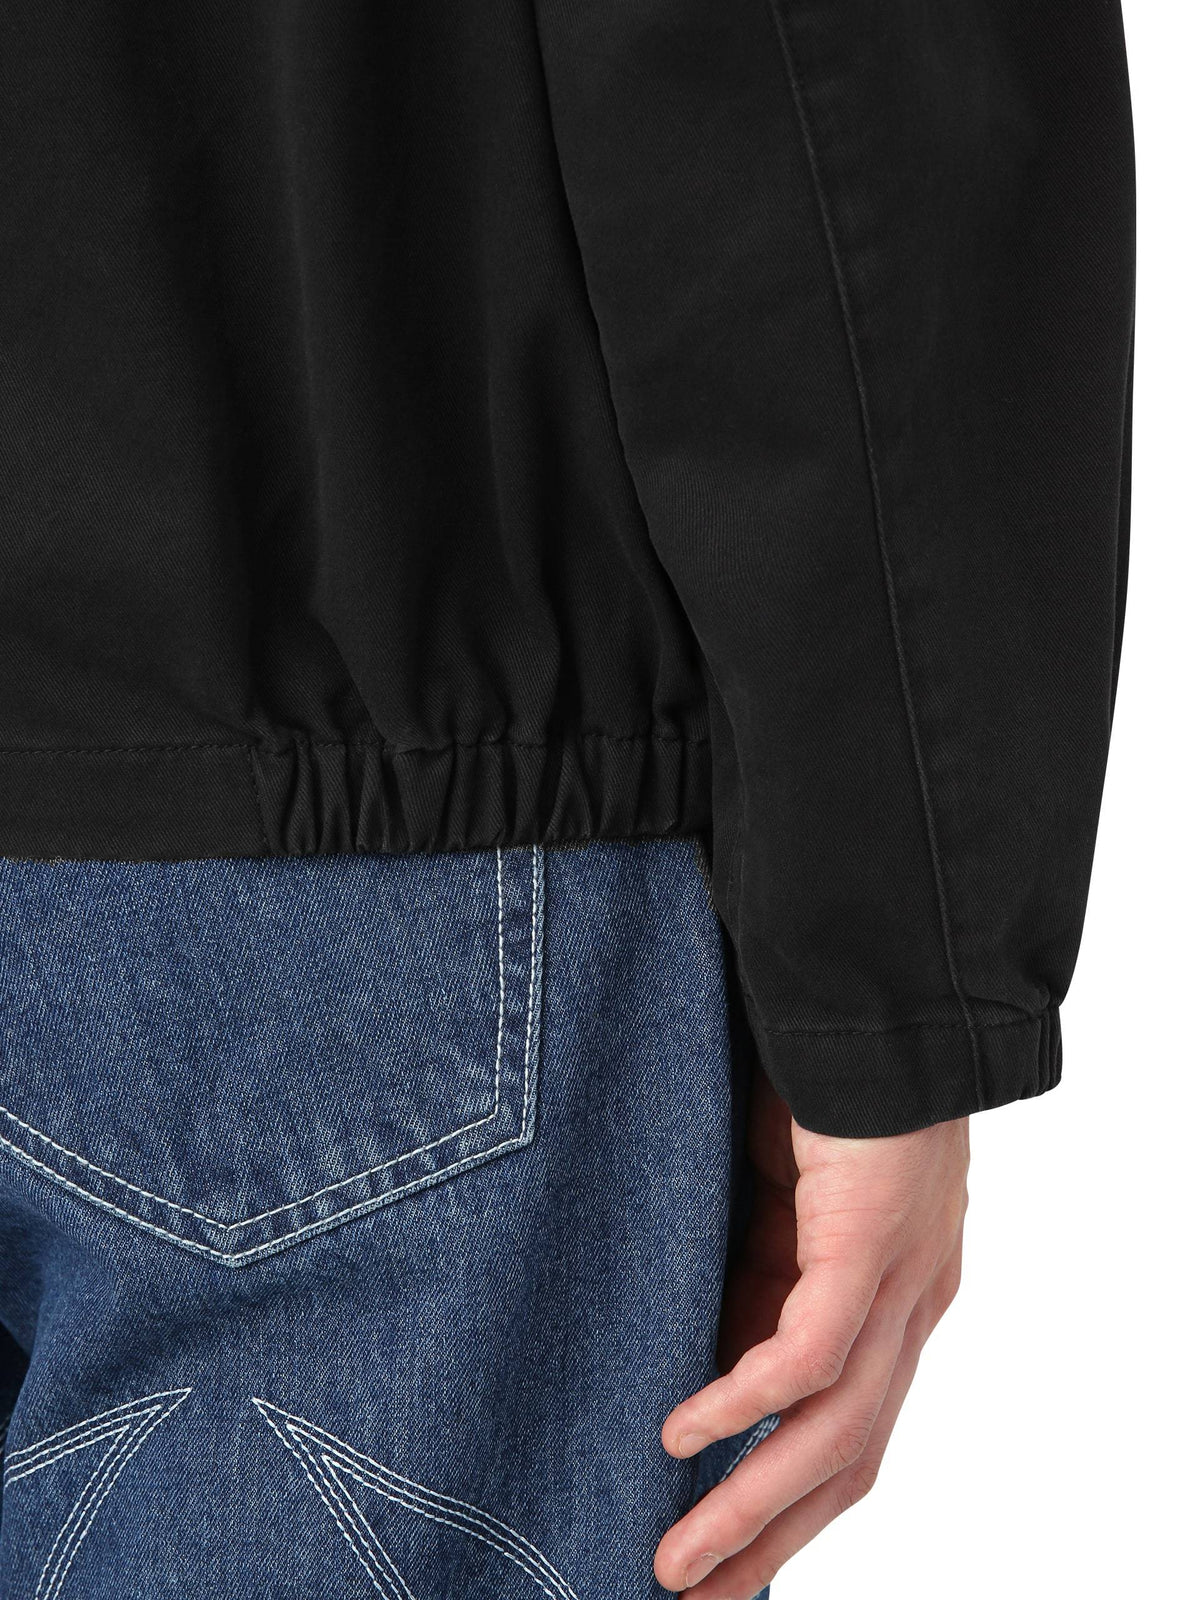 Raglan Zip Jacket Outerwear 